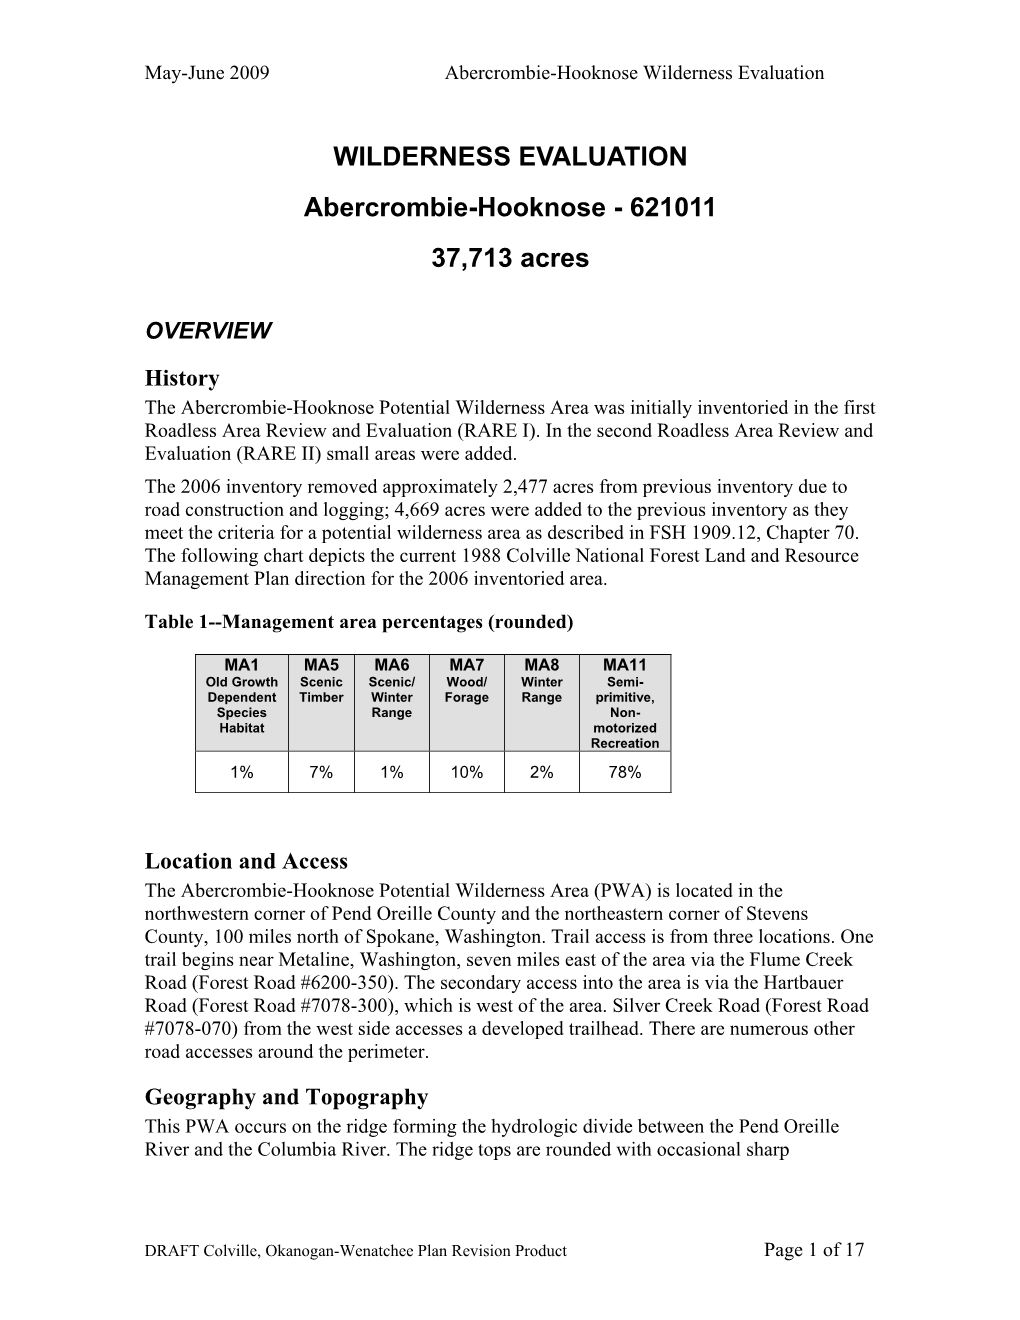 Abercrombie-Hooknose Wilderness Evaluation